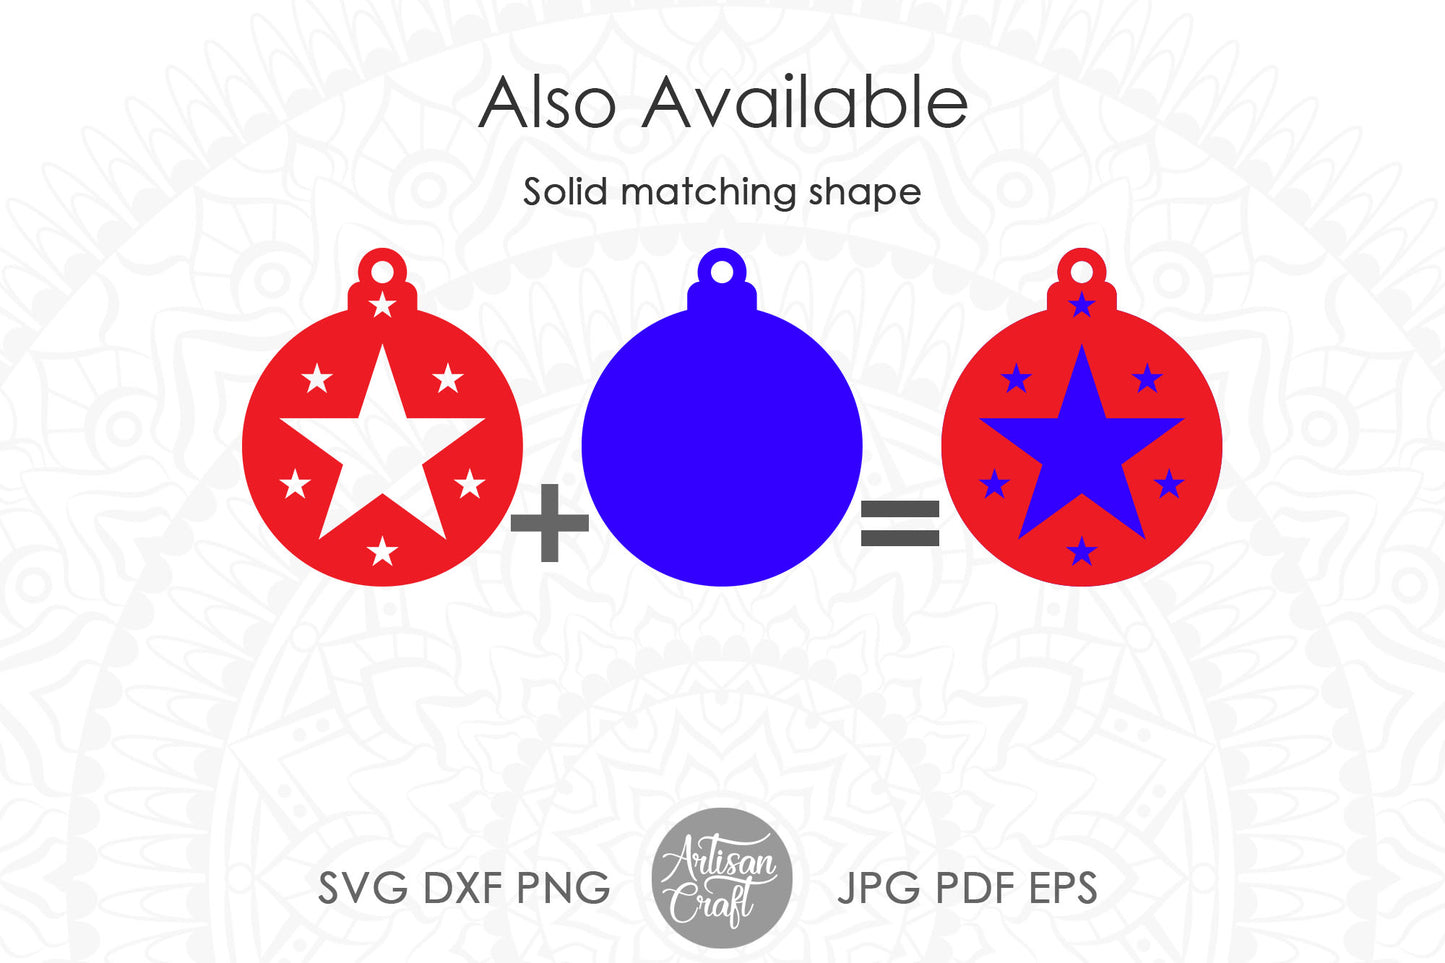 Christmas Ornament SVG, bauble SVG